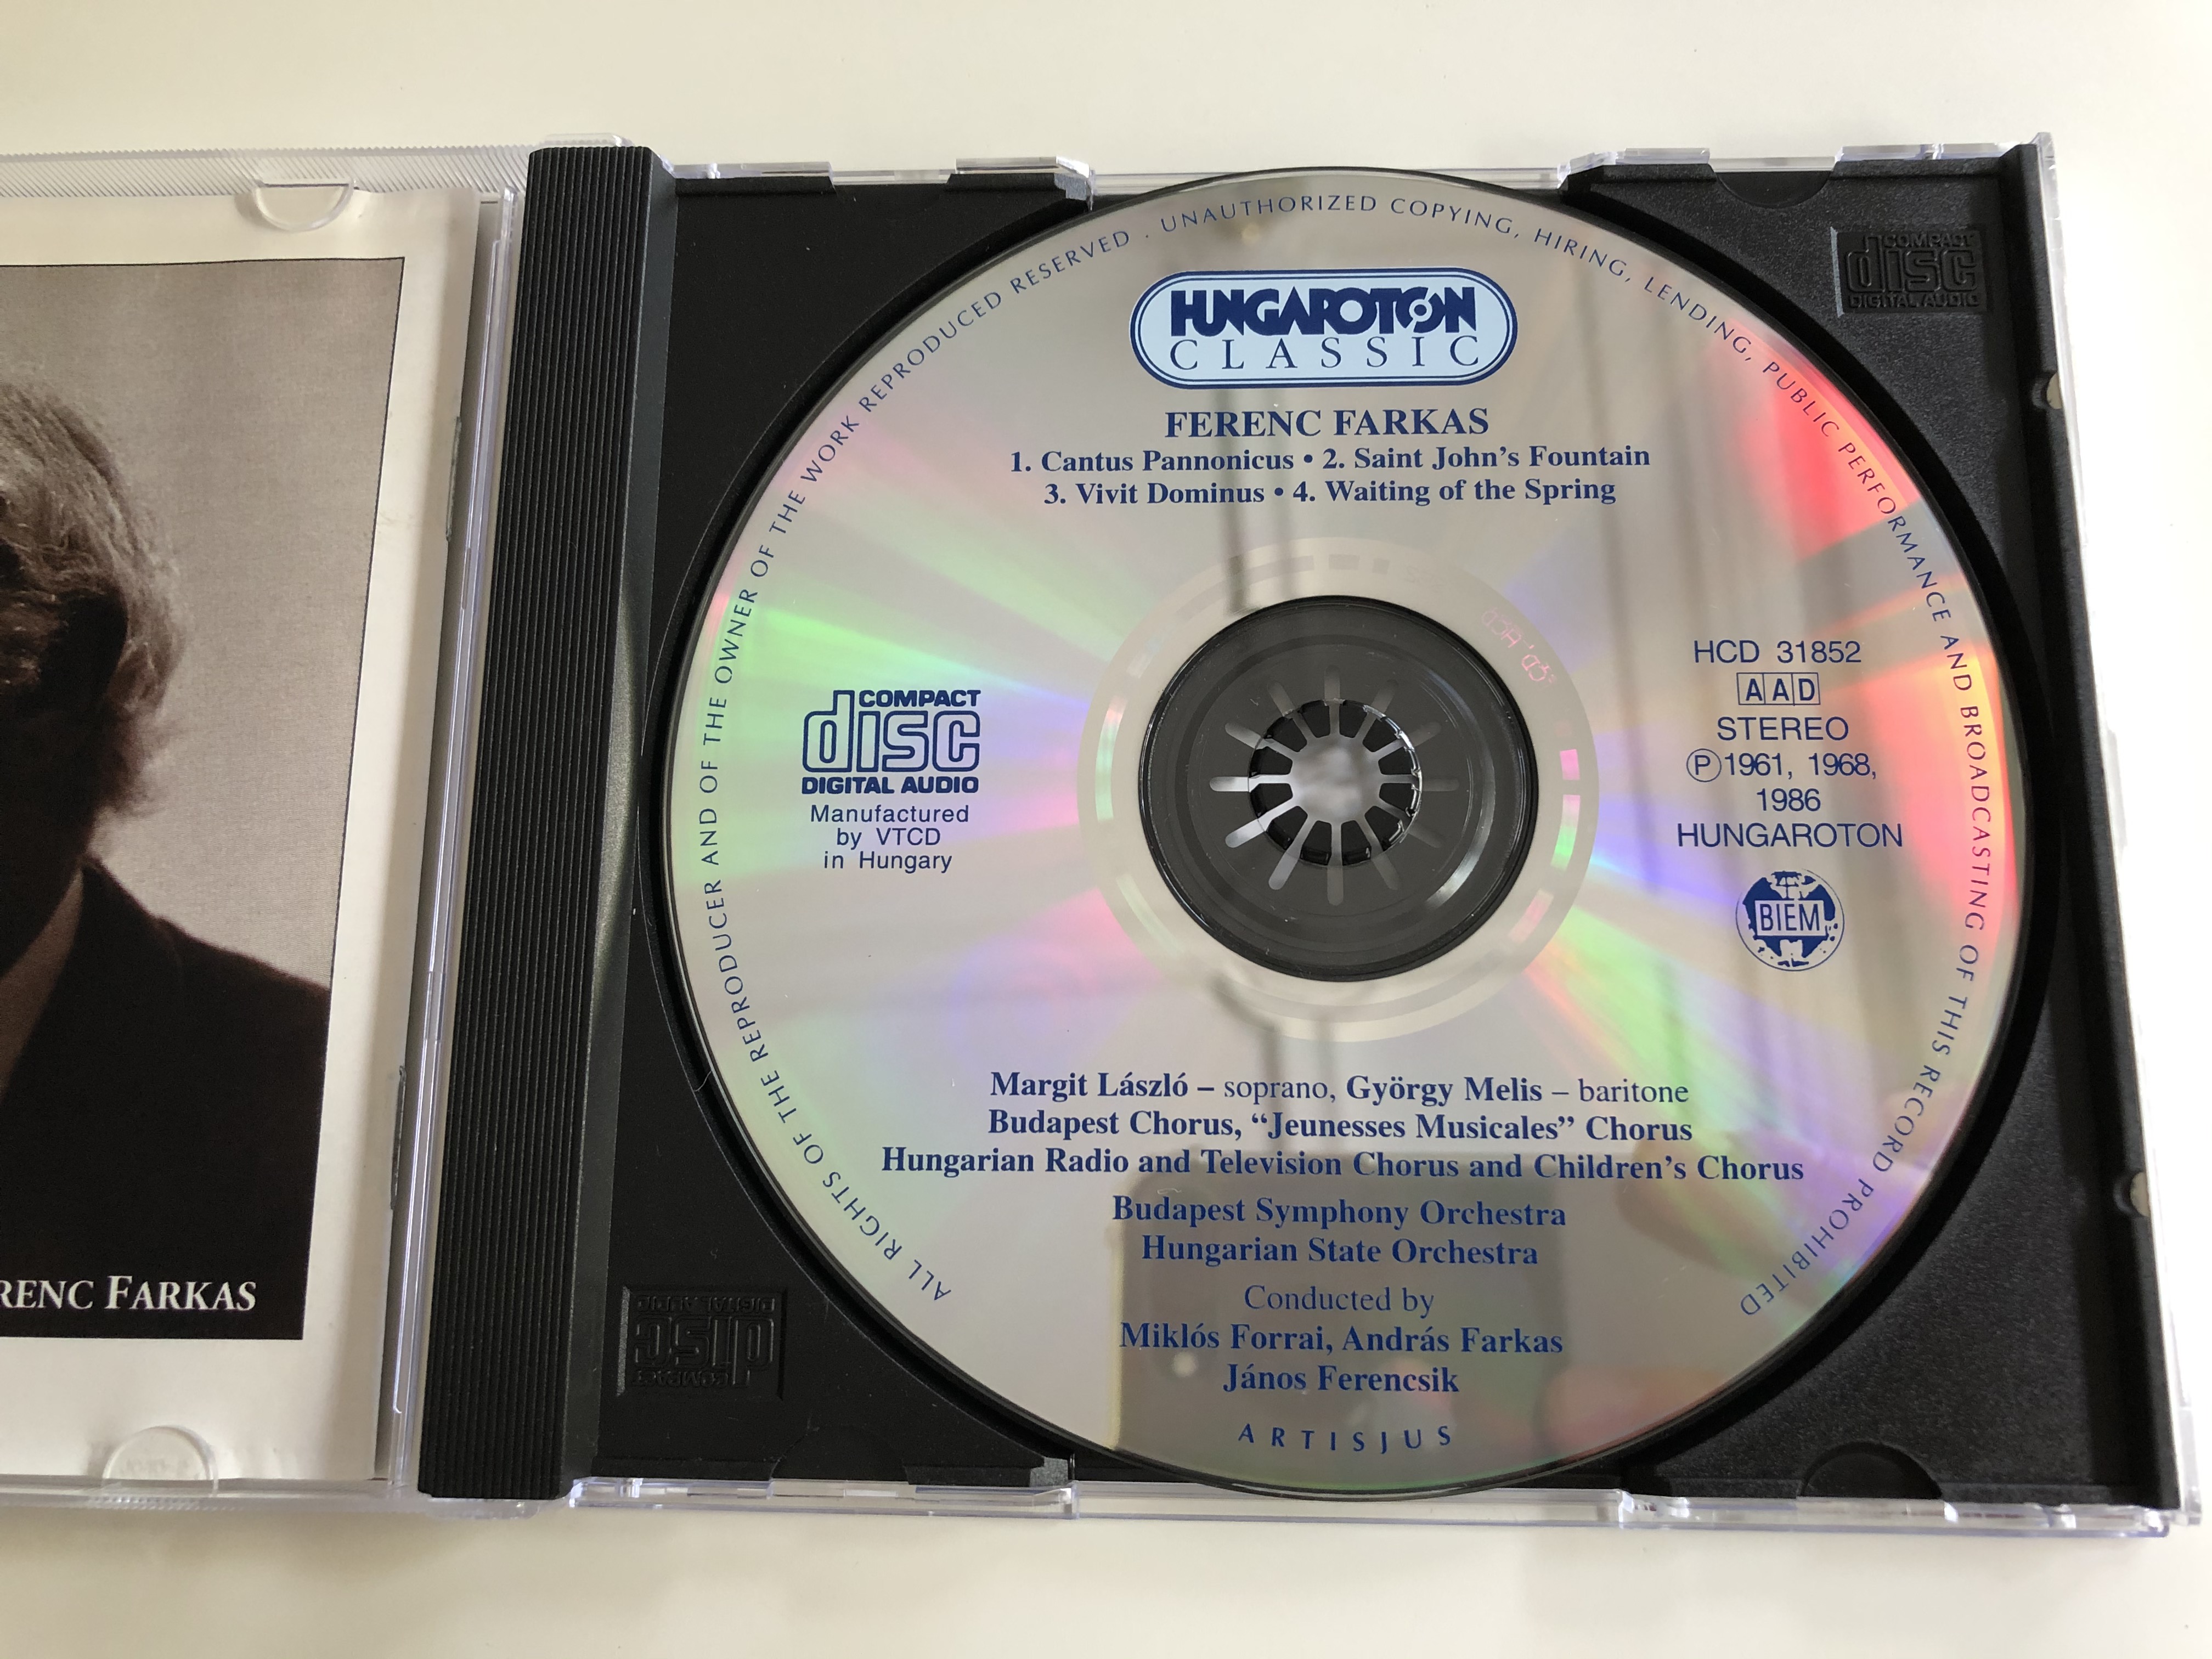 ferenc-farkas-cantatas-cantus-pannonicus-saint-john-s-fountain-vivit-dominus-waiting-of-the-spring-hungaroton-classic-audio-cd-1999-stereo-hcd-31852-8-.jpg